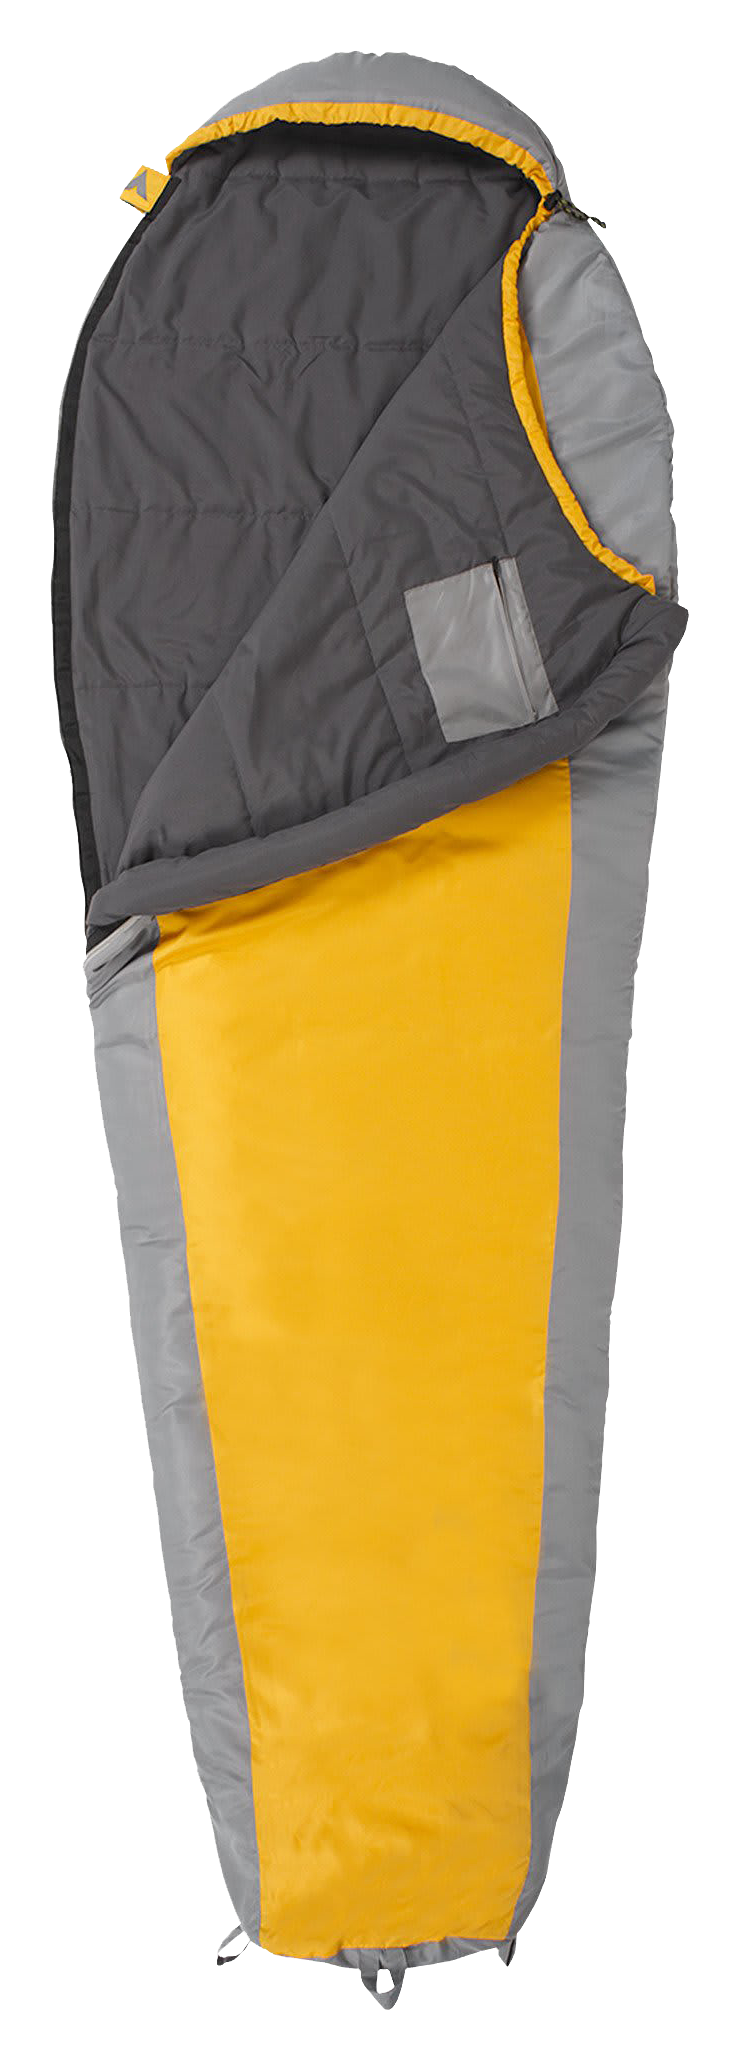 TETON Sports TrailHead 20°F Mummy Sleeping Bag